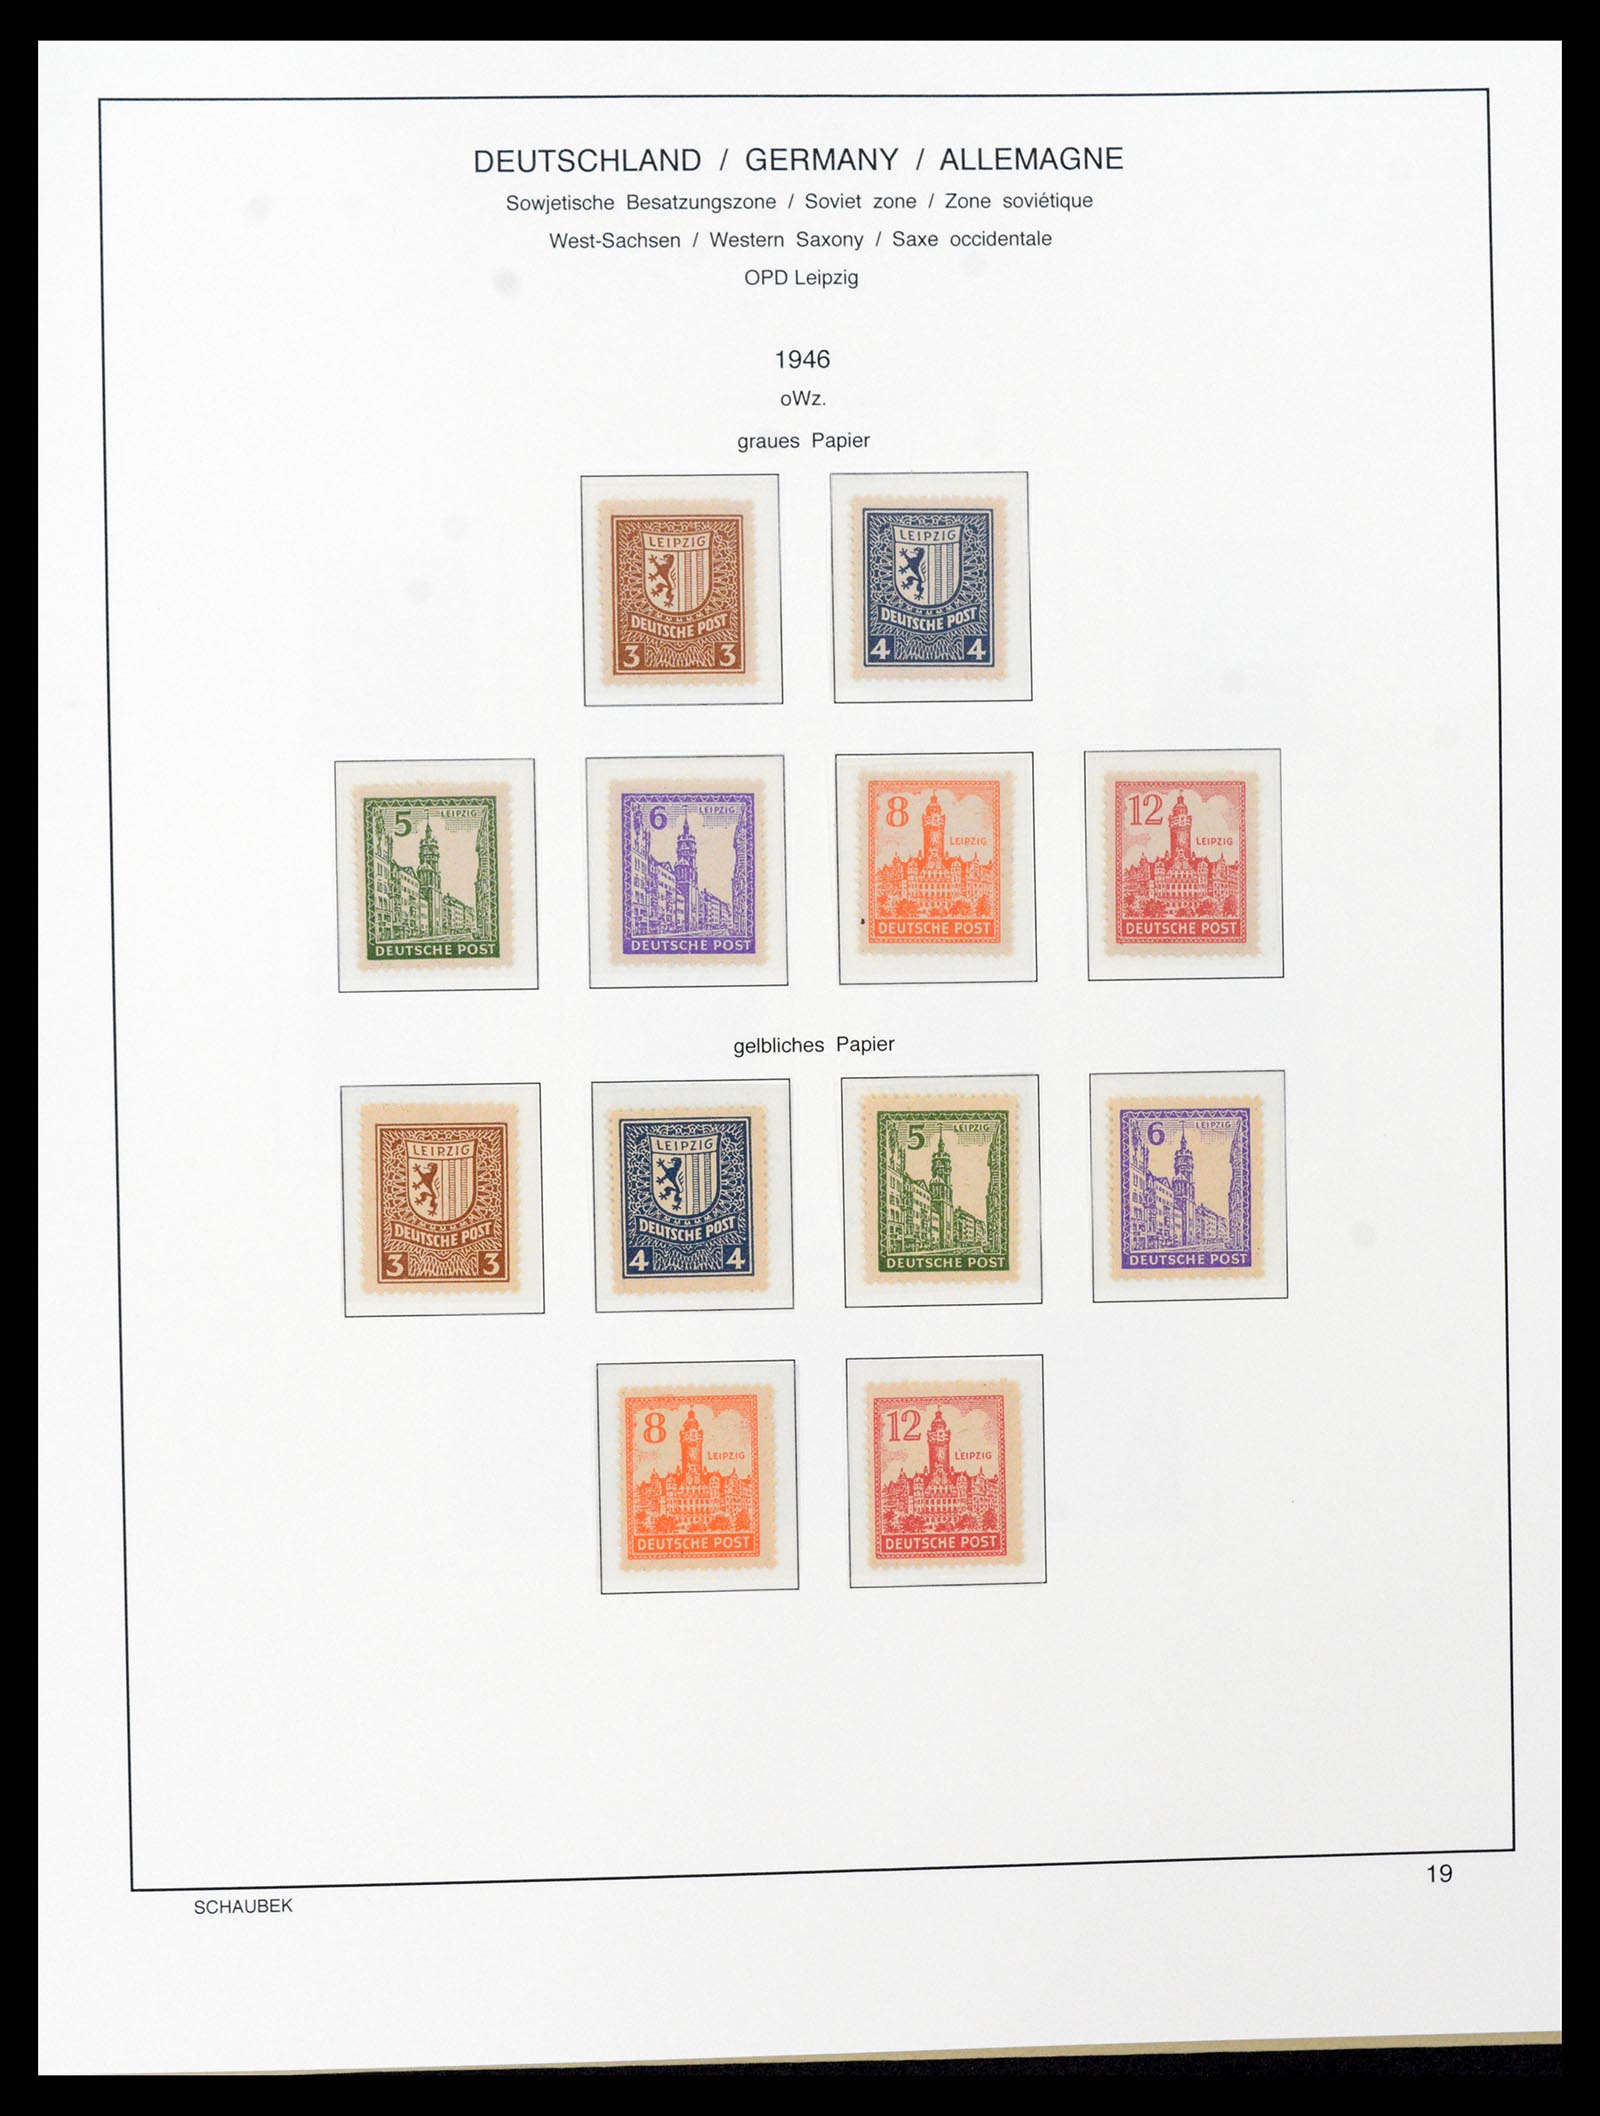 37645 043 - Stamp collection 37645 German Zones 1945-1949.